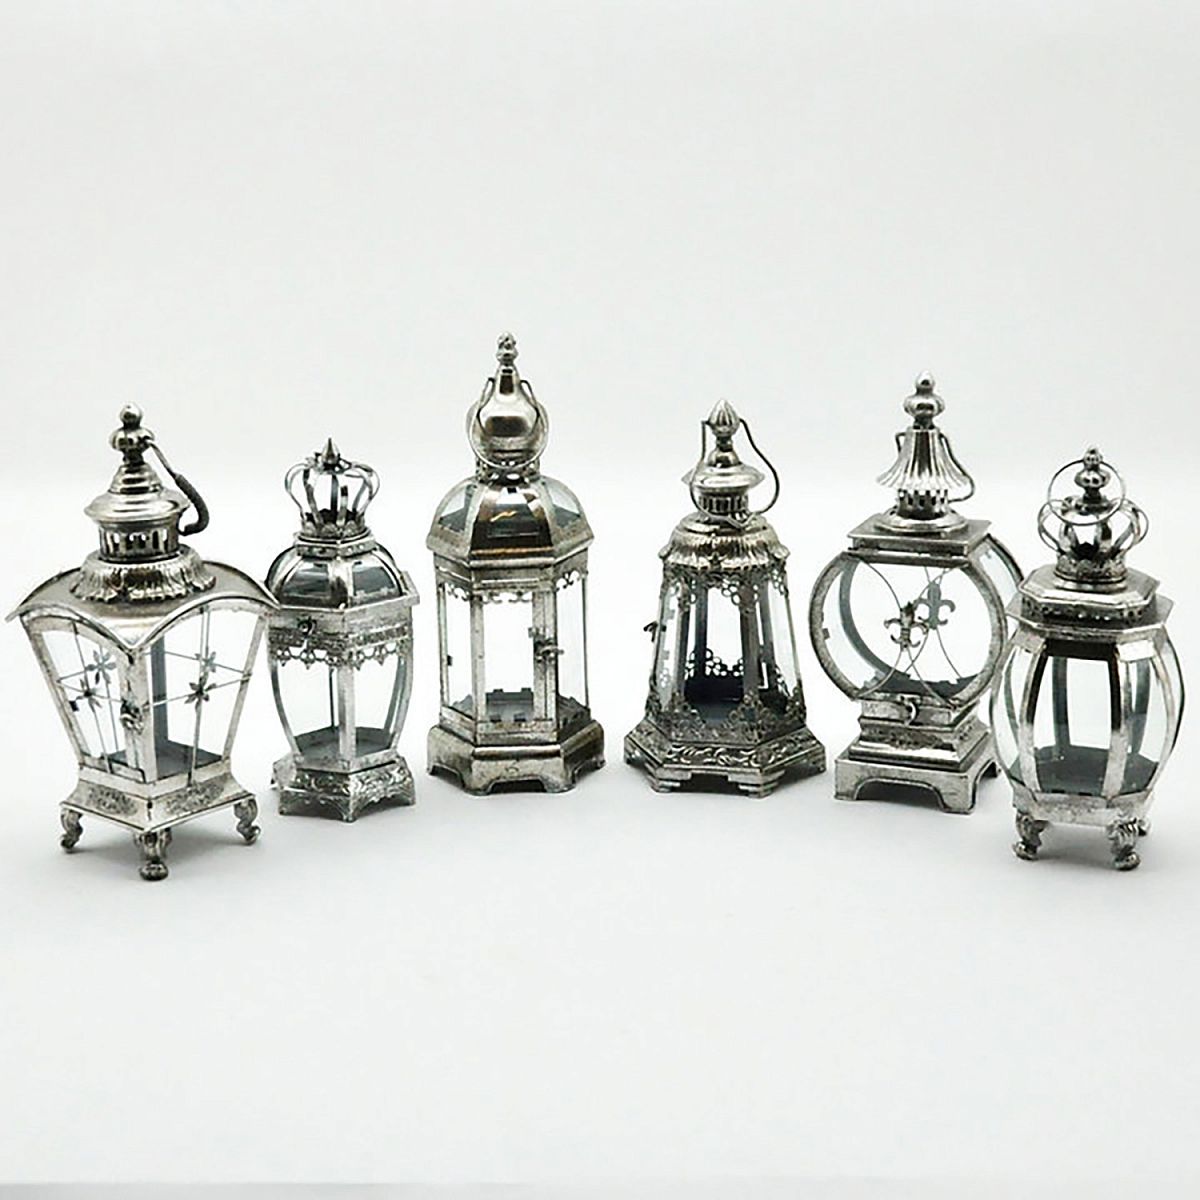 6 Assorted Metal Garden Lanterns by Minster